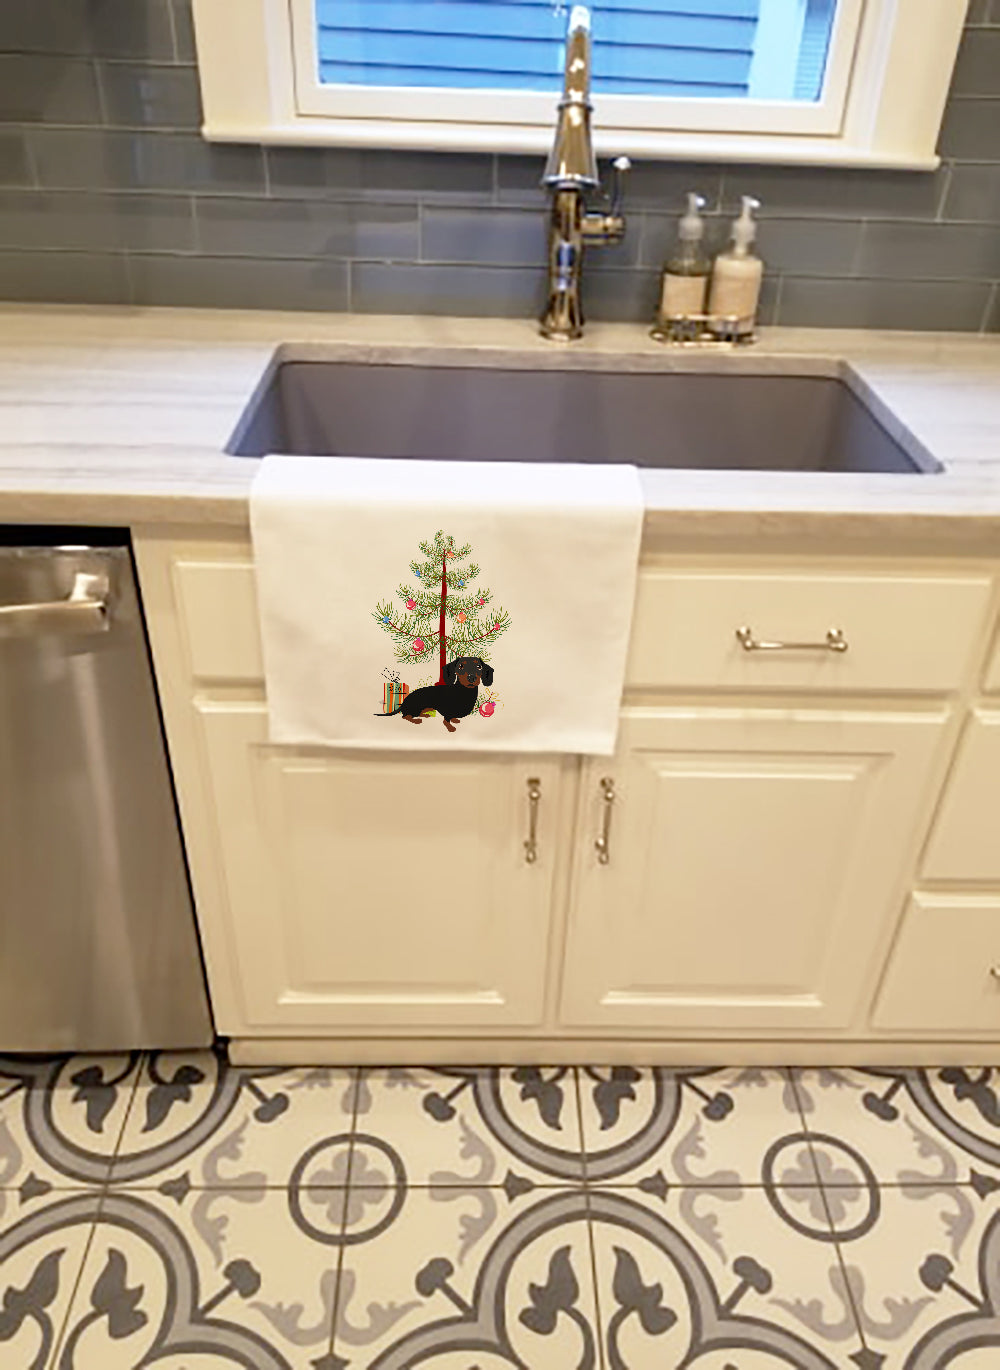 Buy this Dachshund Black and Tan #1 Christmas White Kitchen Towel Set of 2